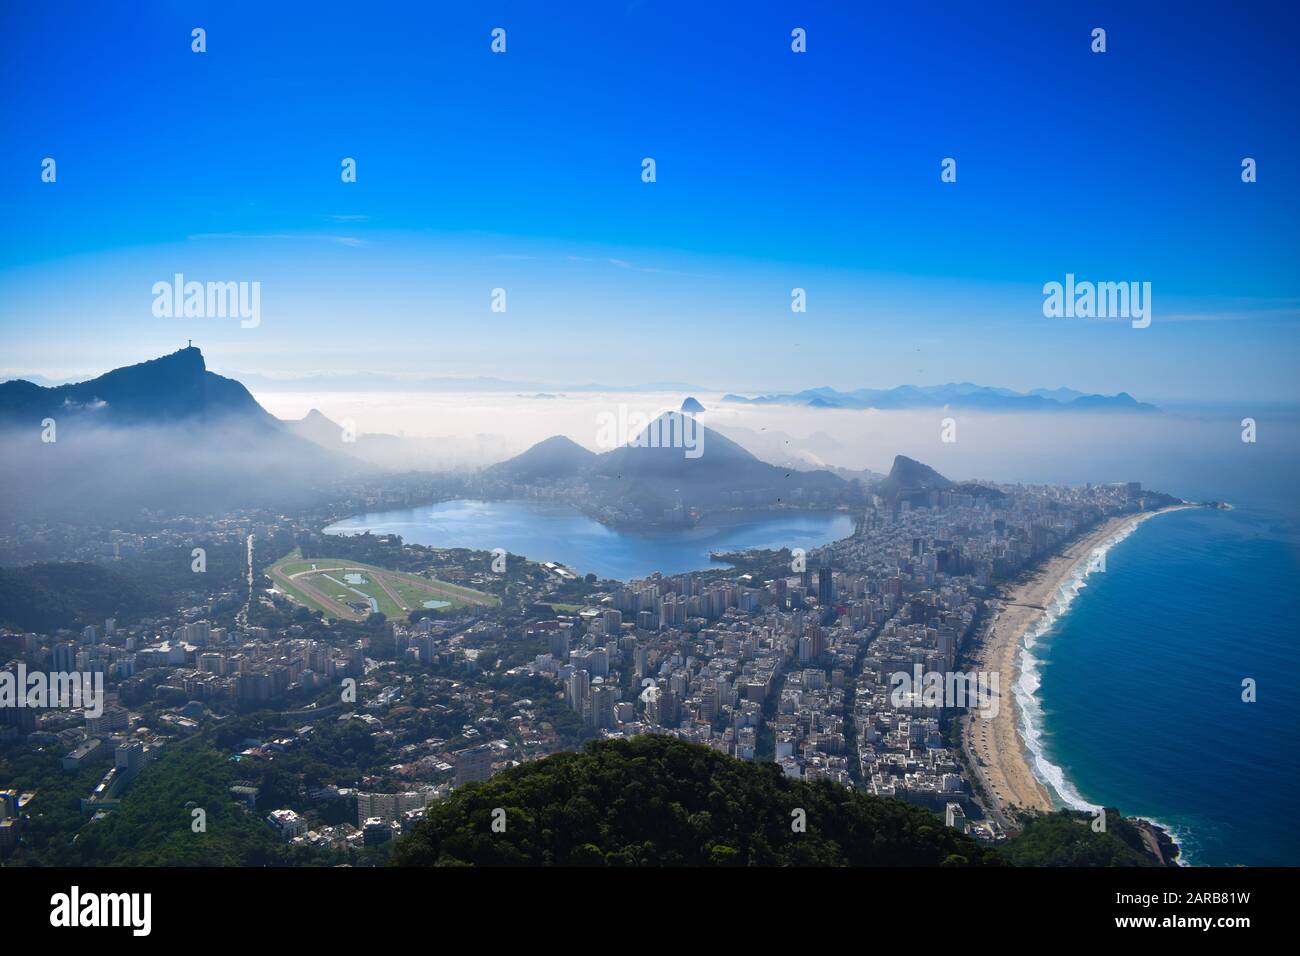 View of Rio de Janeiro from the Morro dois irmaos, Rio de Janerio, Brazil Stock Photo